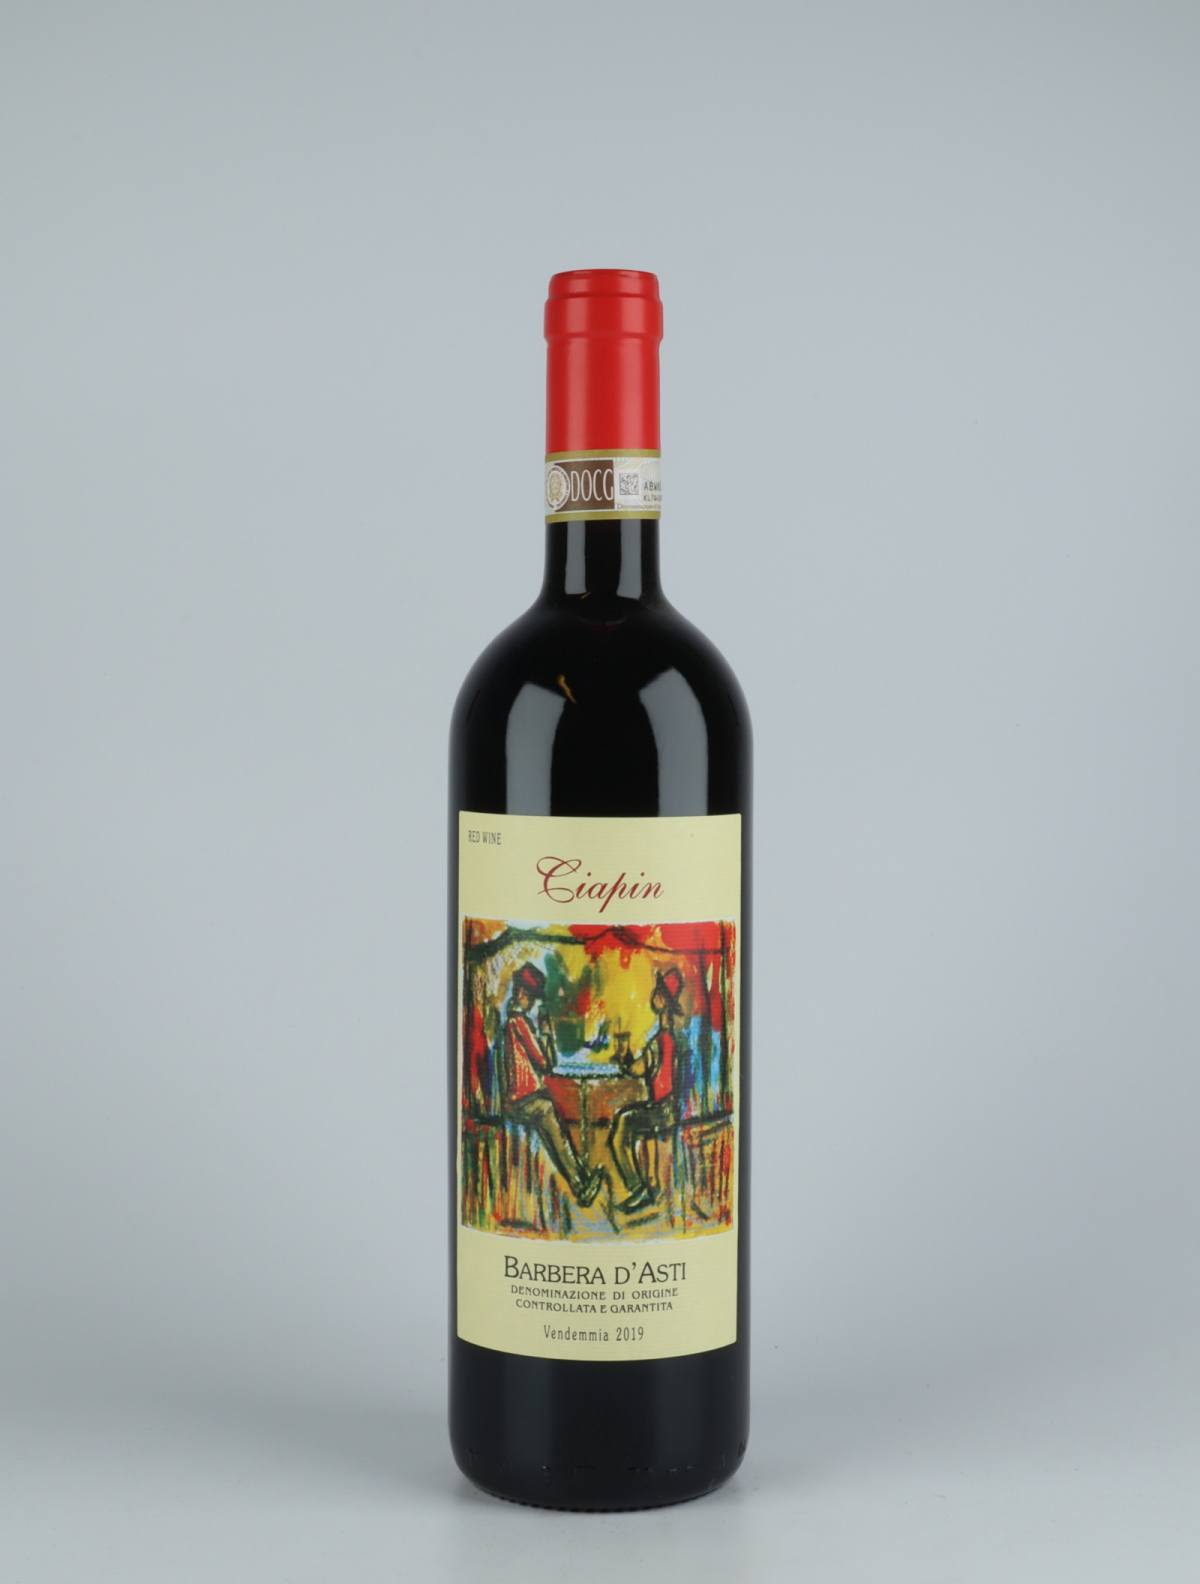 En flaske 2019 Barbera d'Asti - Ciapin Rødvin fra Andrea Scovero, Piemonte i Italien